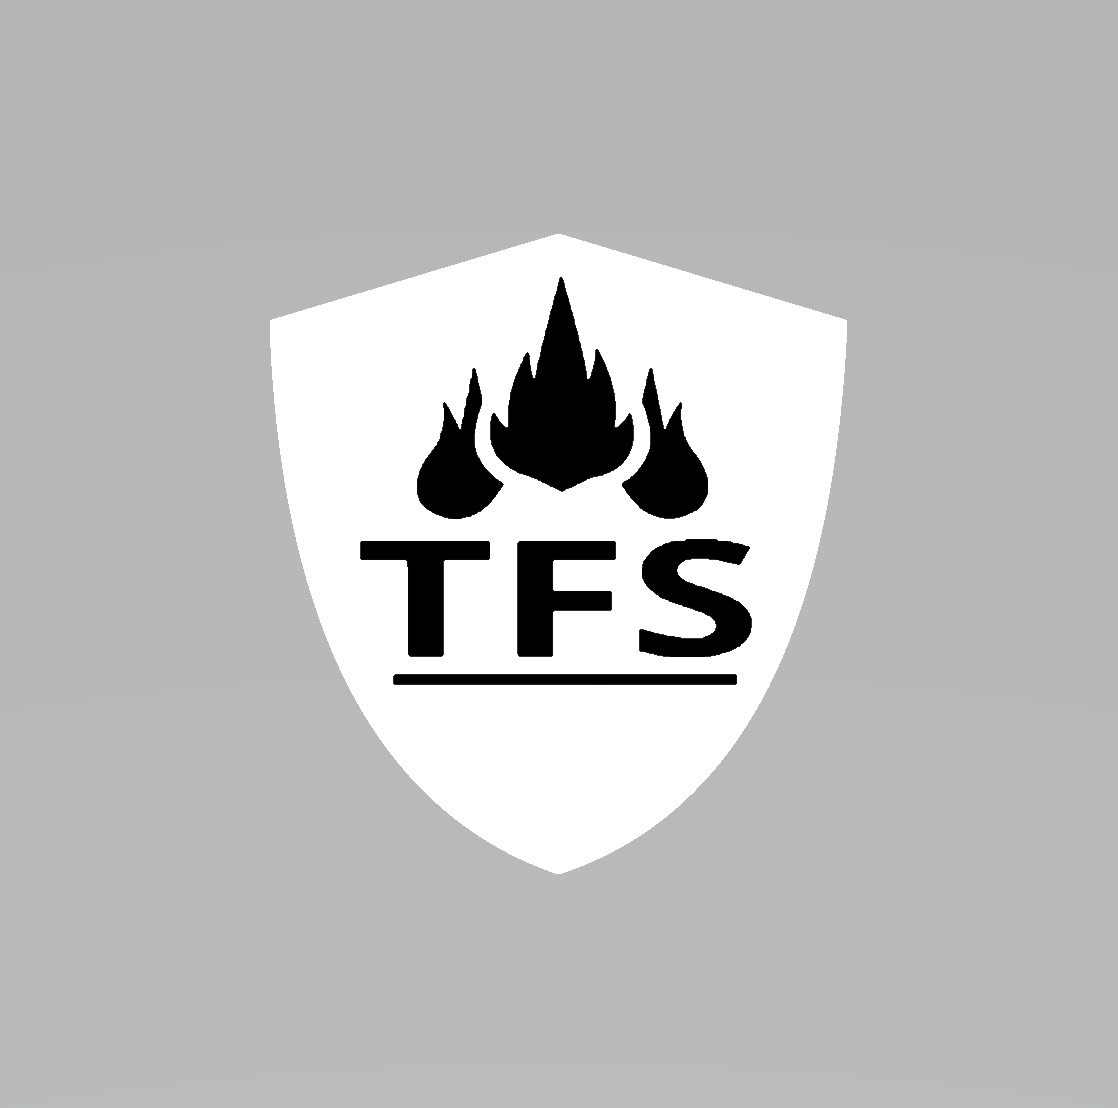 Fire Extinguisher Certification Orlando Florida